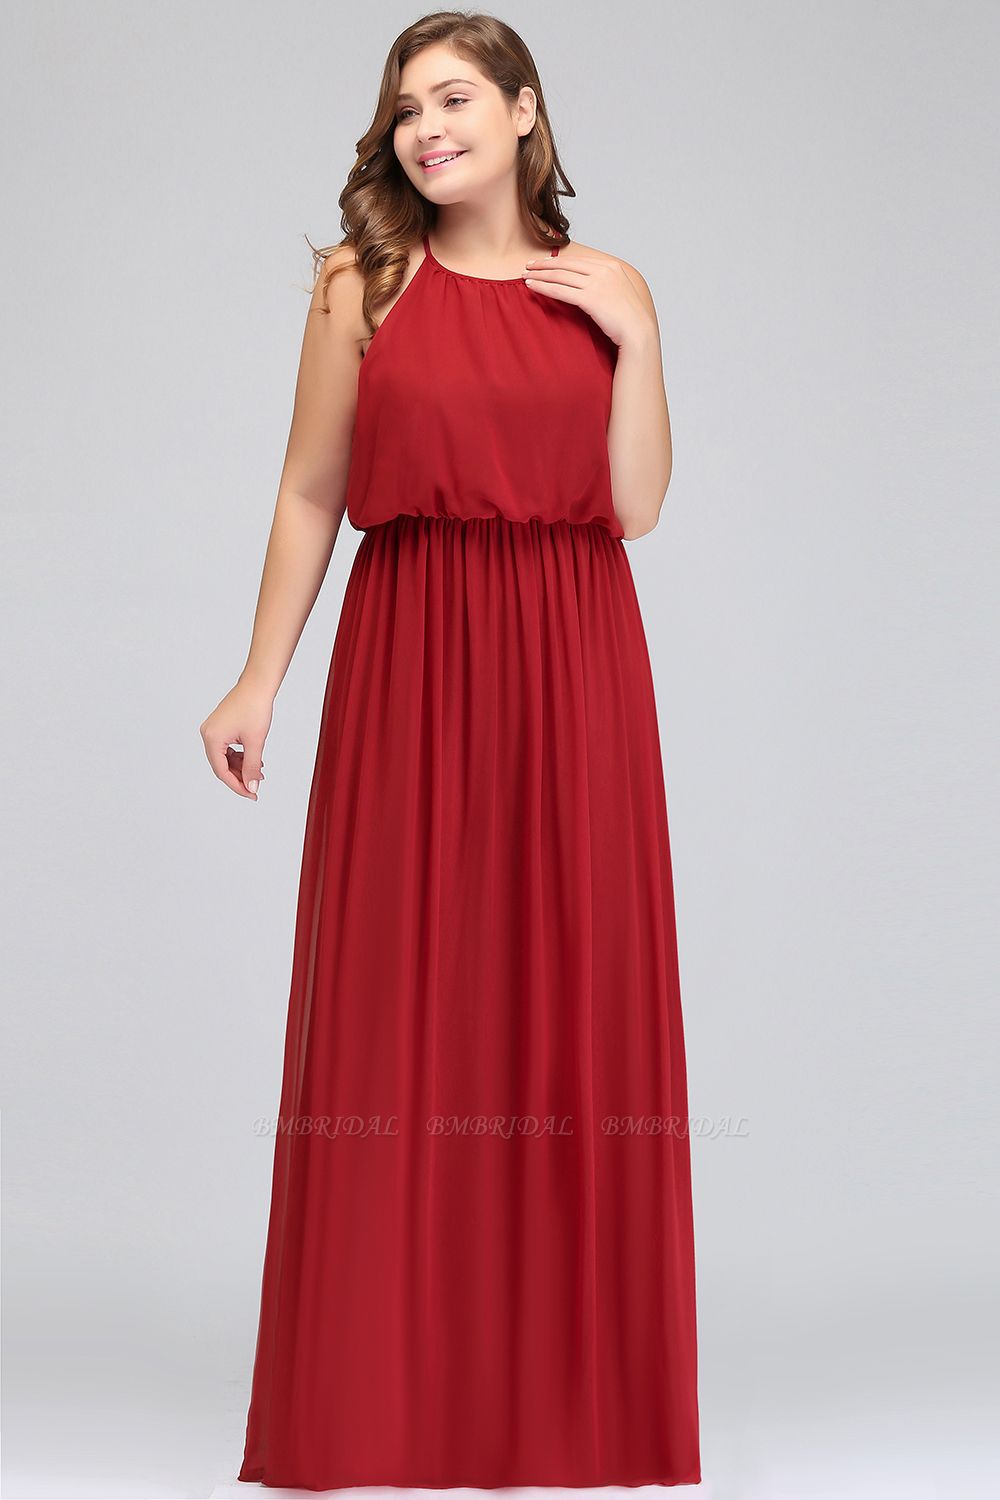 BMbridal Plus Size Elegant Halter Red Chiffon Long Bridesmaid Dresses with Ruffle